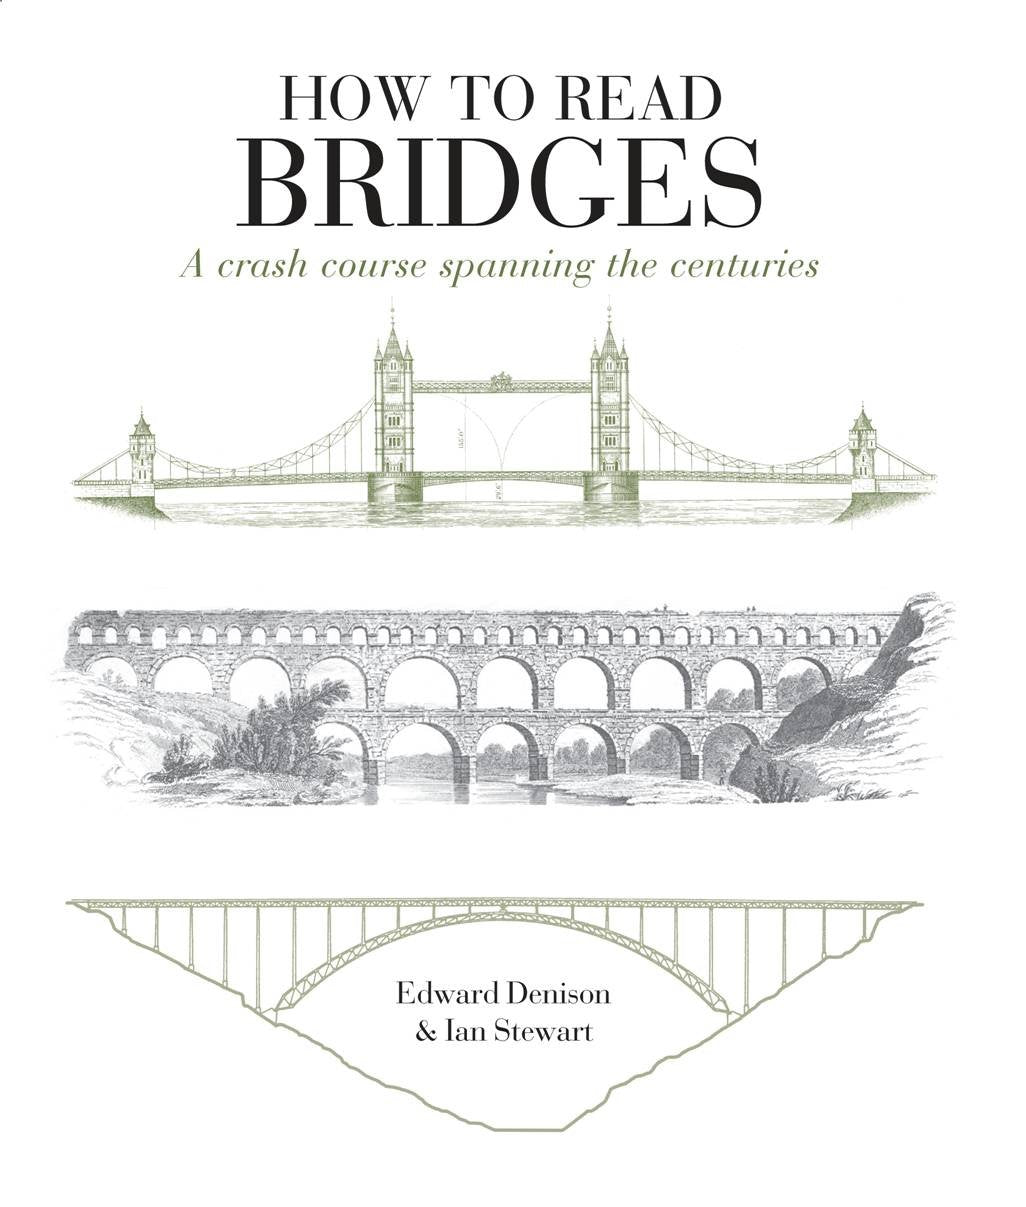 How to Read Bridges by Edward Denison & Ian Steward